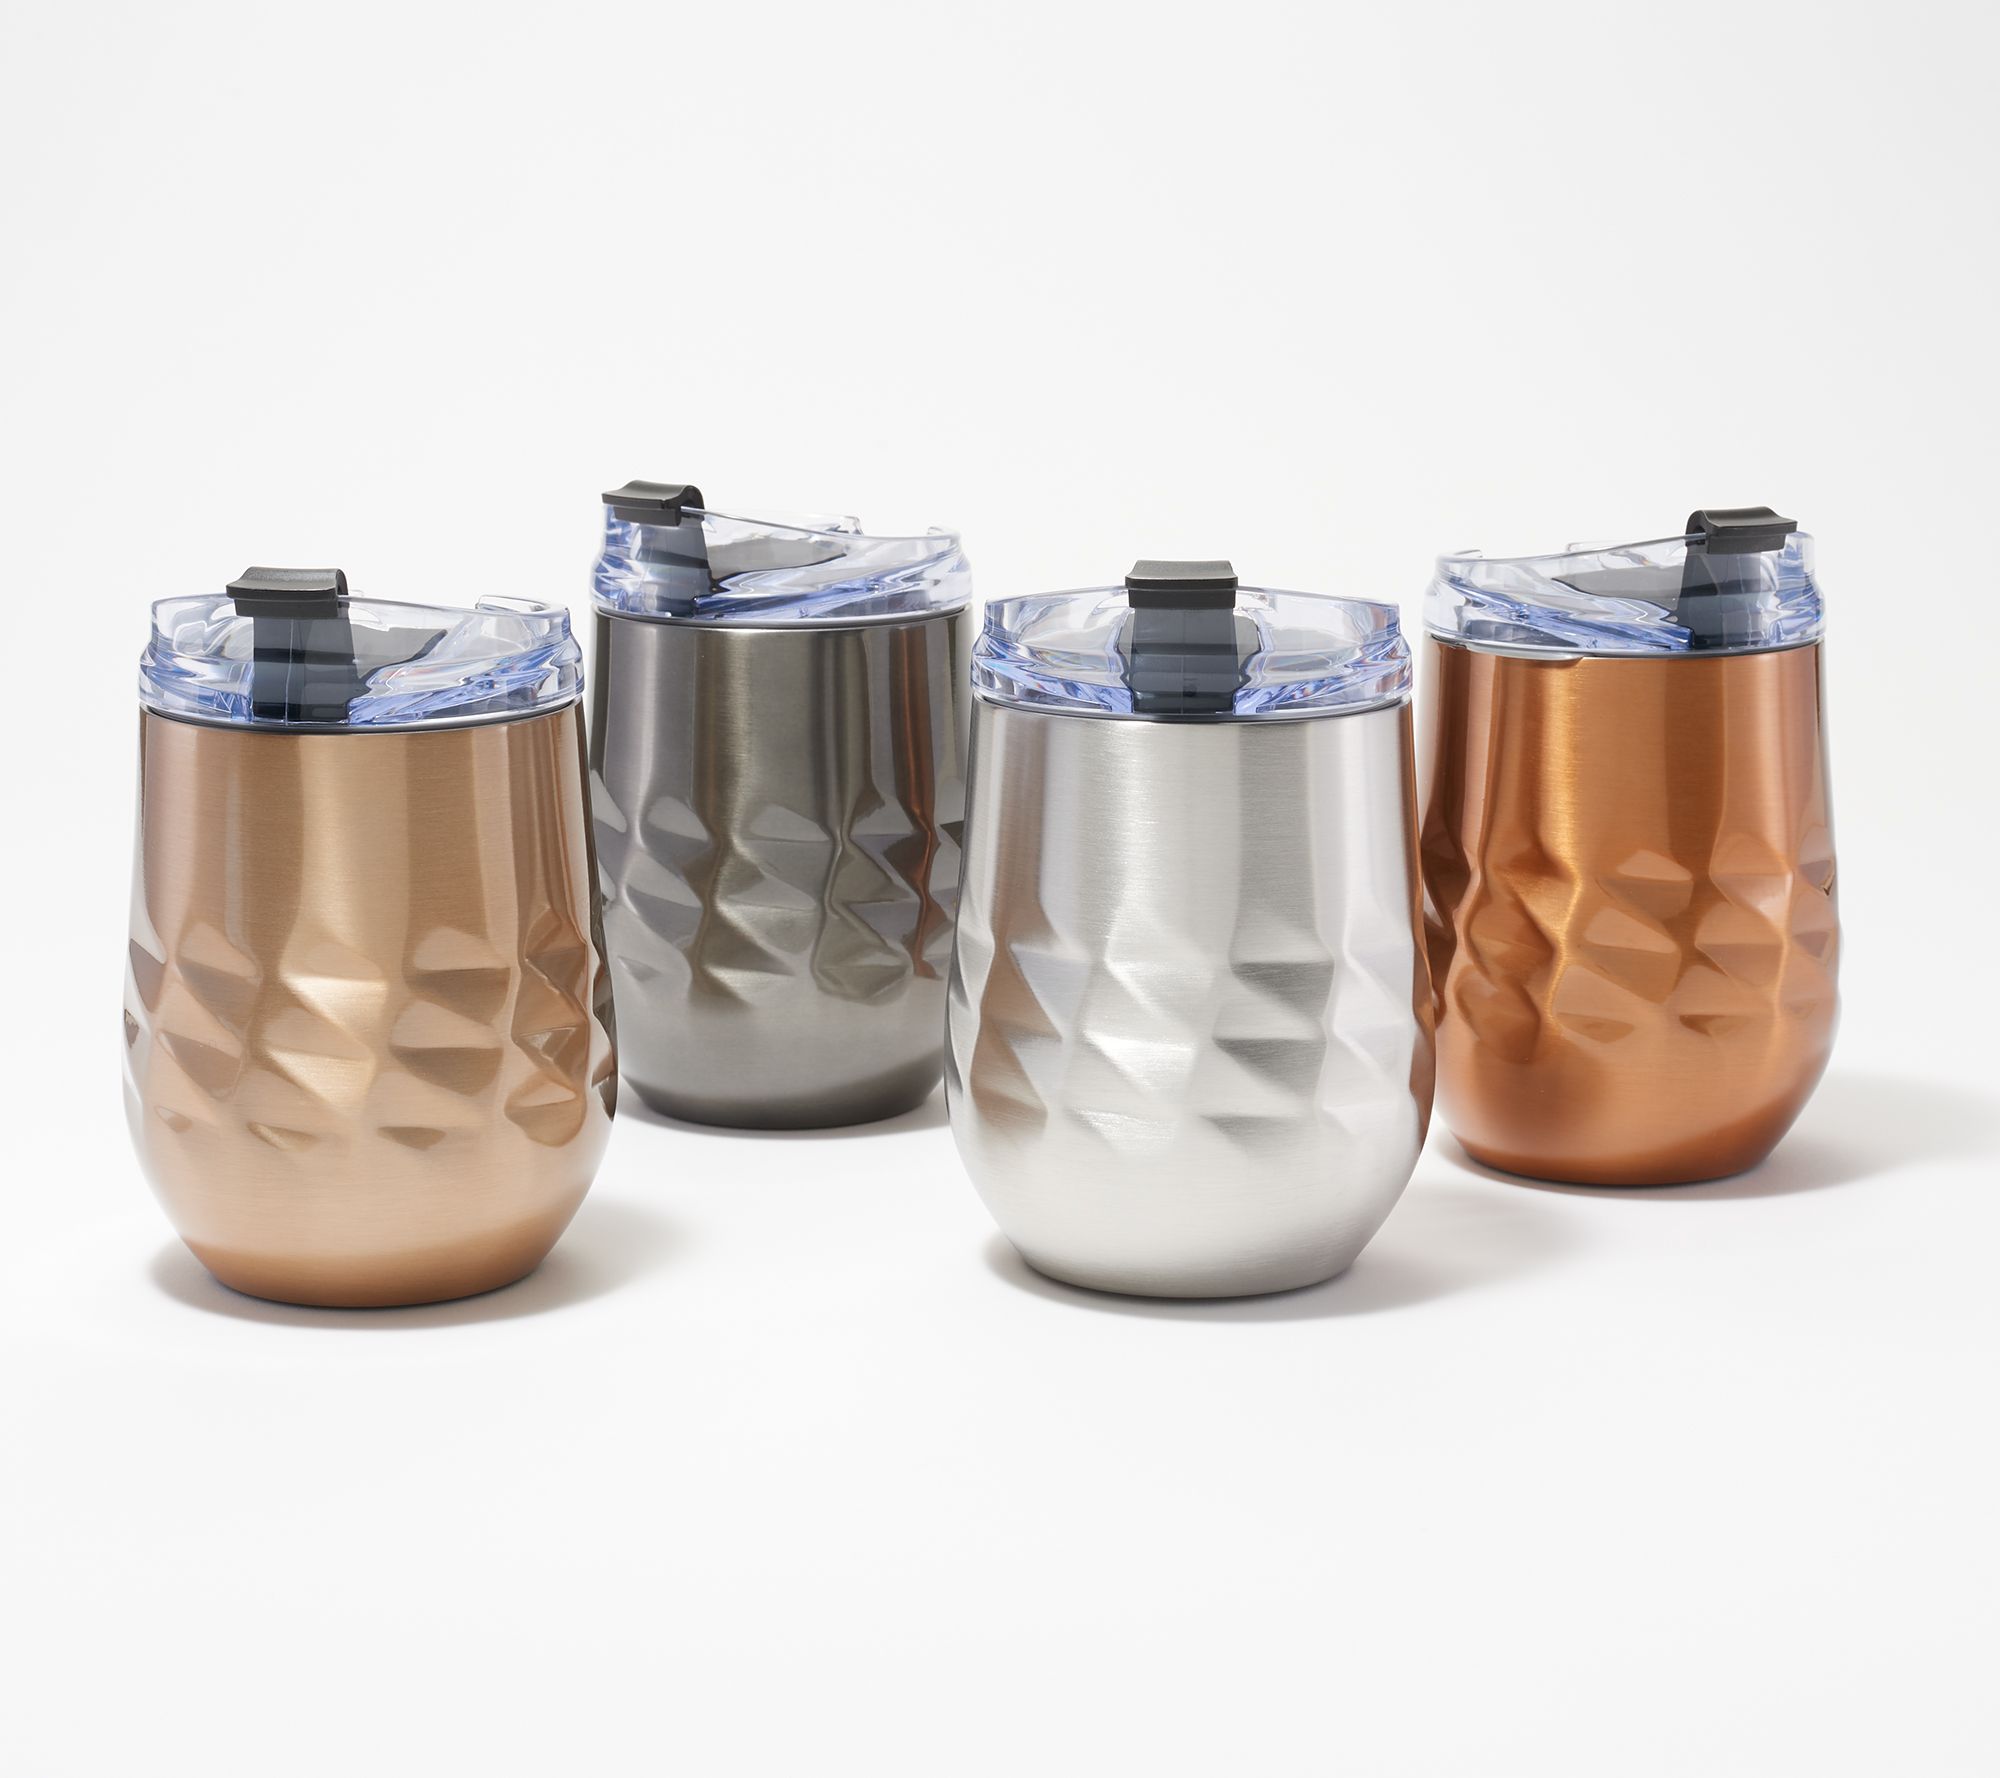 So Giftable! Primula Peak Drinkware 4-Packs Only $25.48 Shipped (Just $6.37  per Tumbler, Water Bottle, or Mug!)